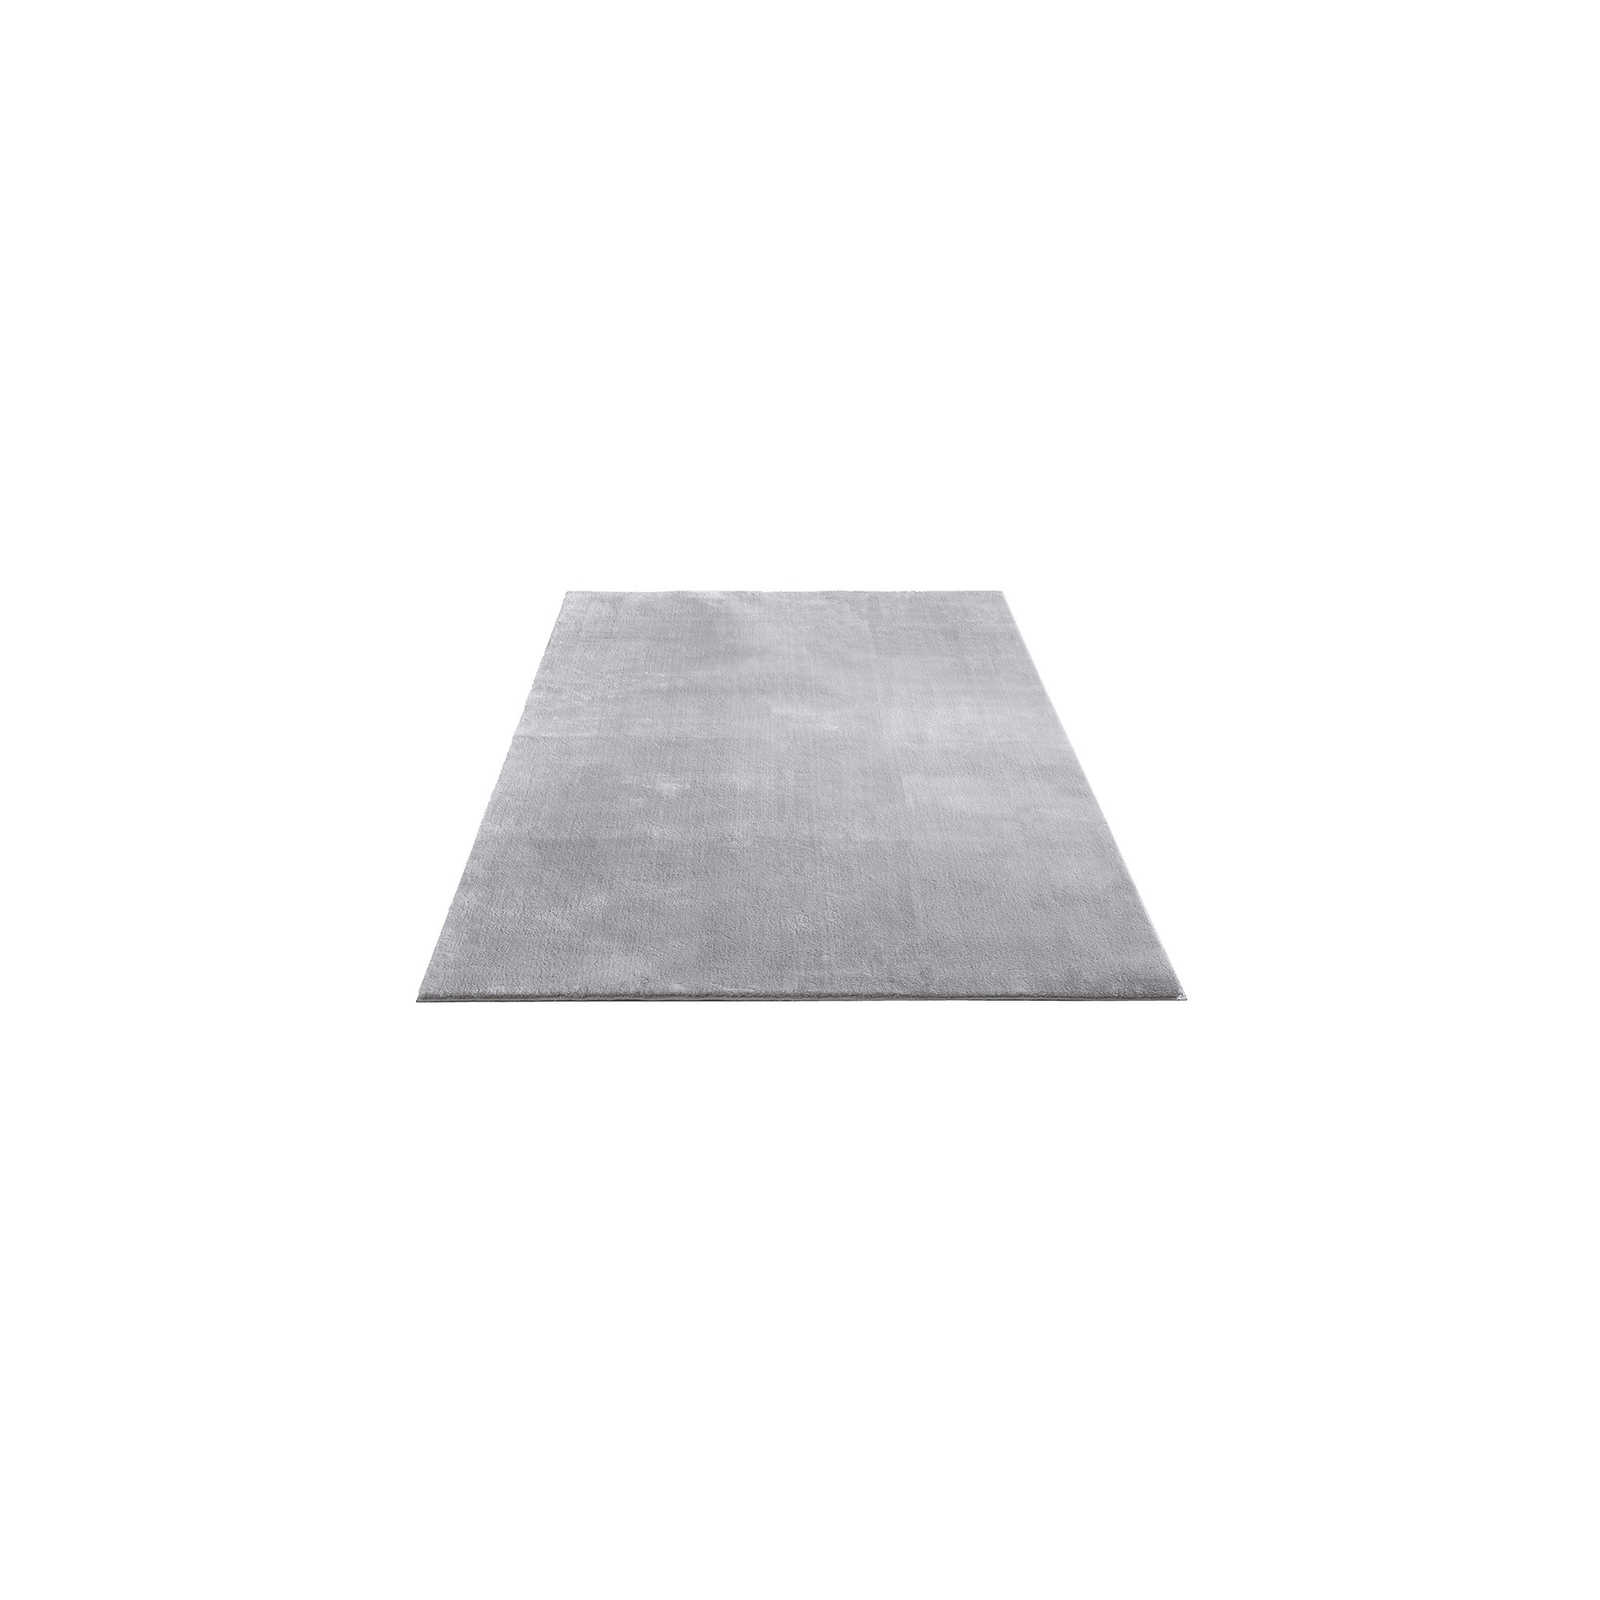 Fine high pile carpet in grey - 170 x 120 cm
